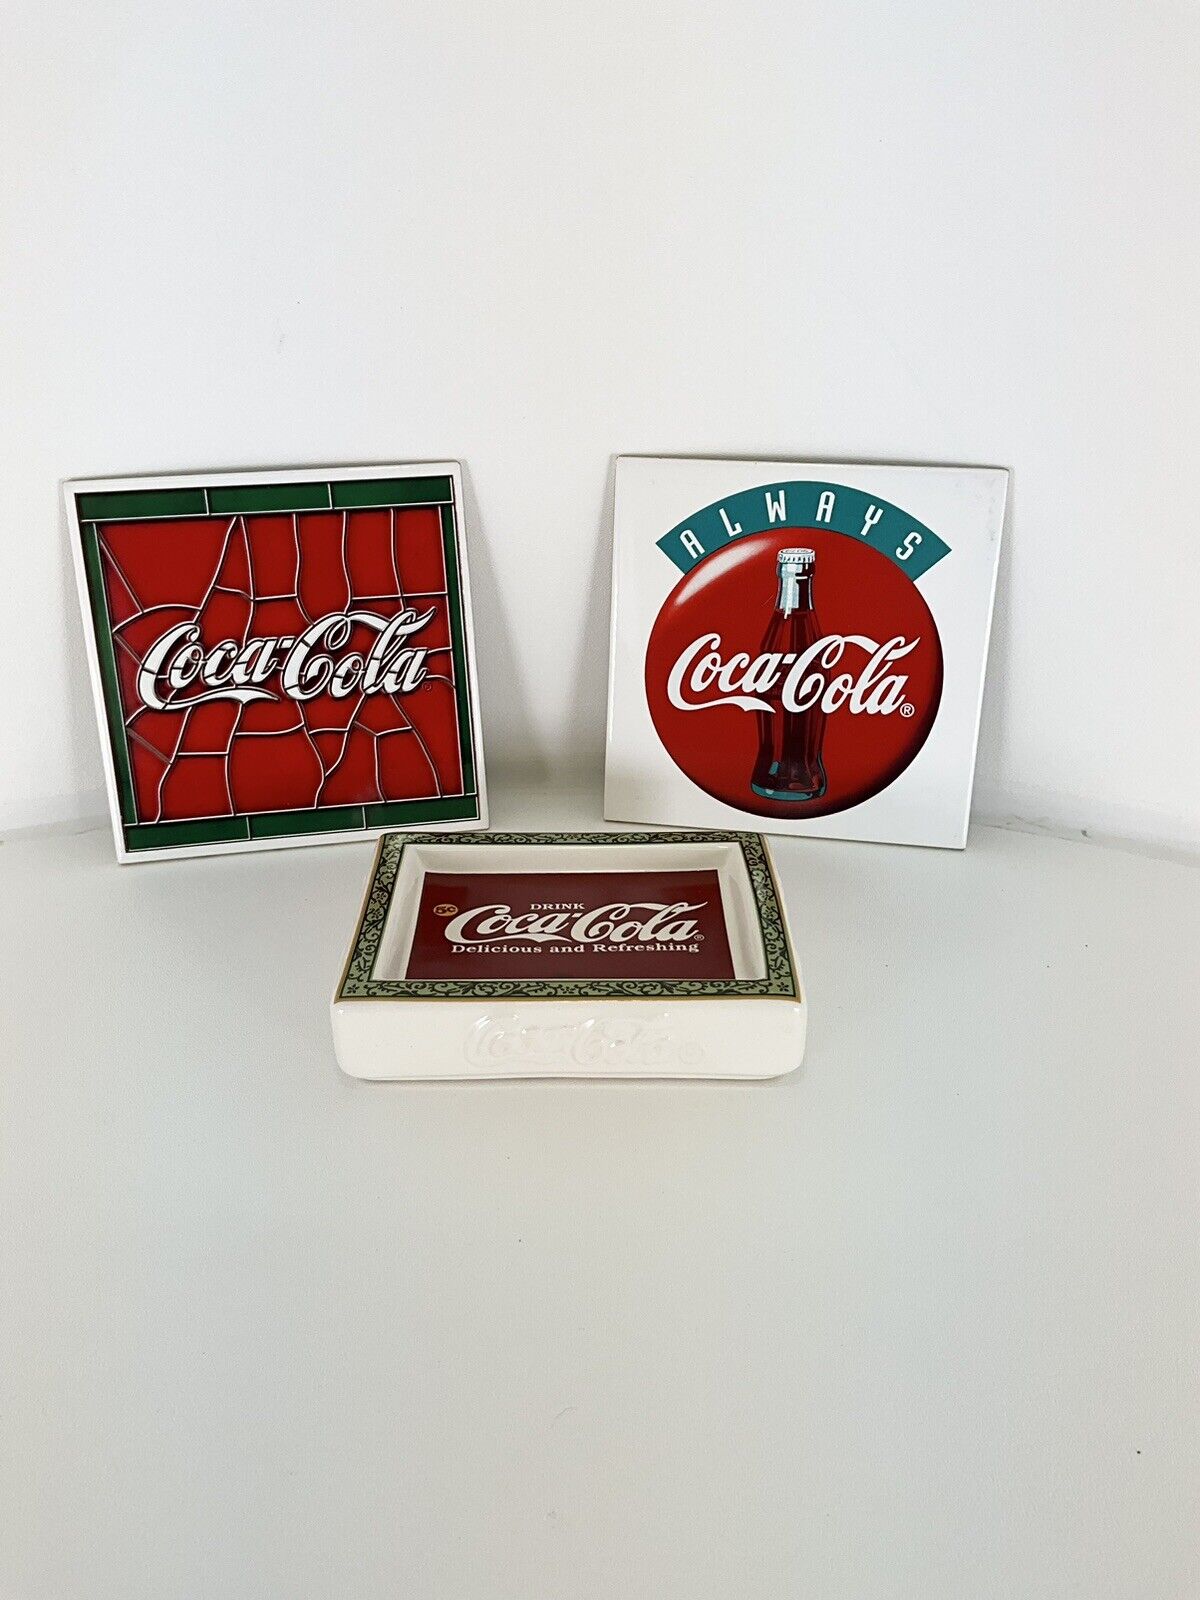 Lot Of Two Ceramic Coca-Cola Tiles And 1 Ceramic Coca - Cola Soap/Trinket Dish